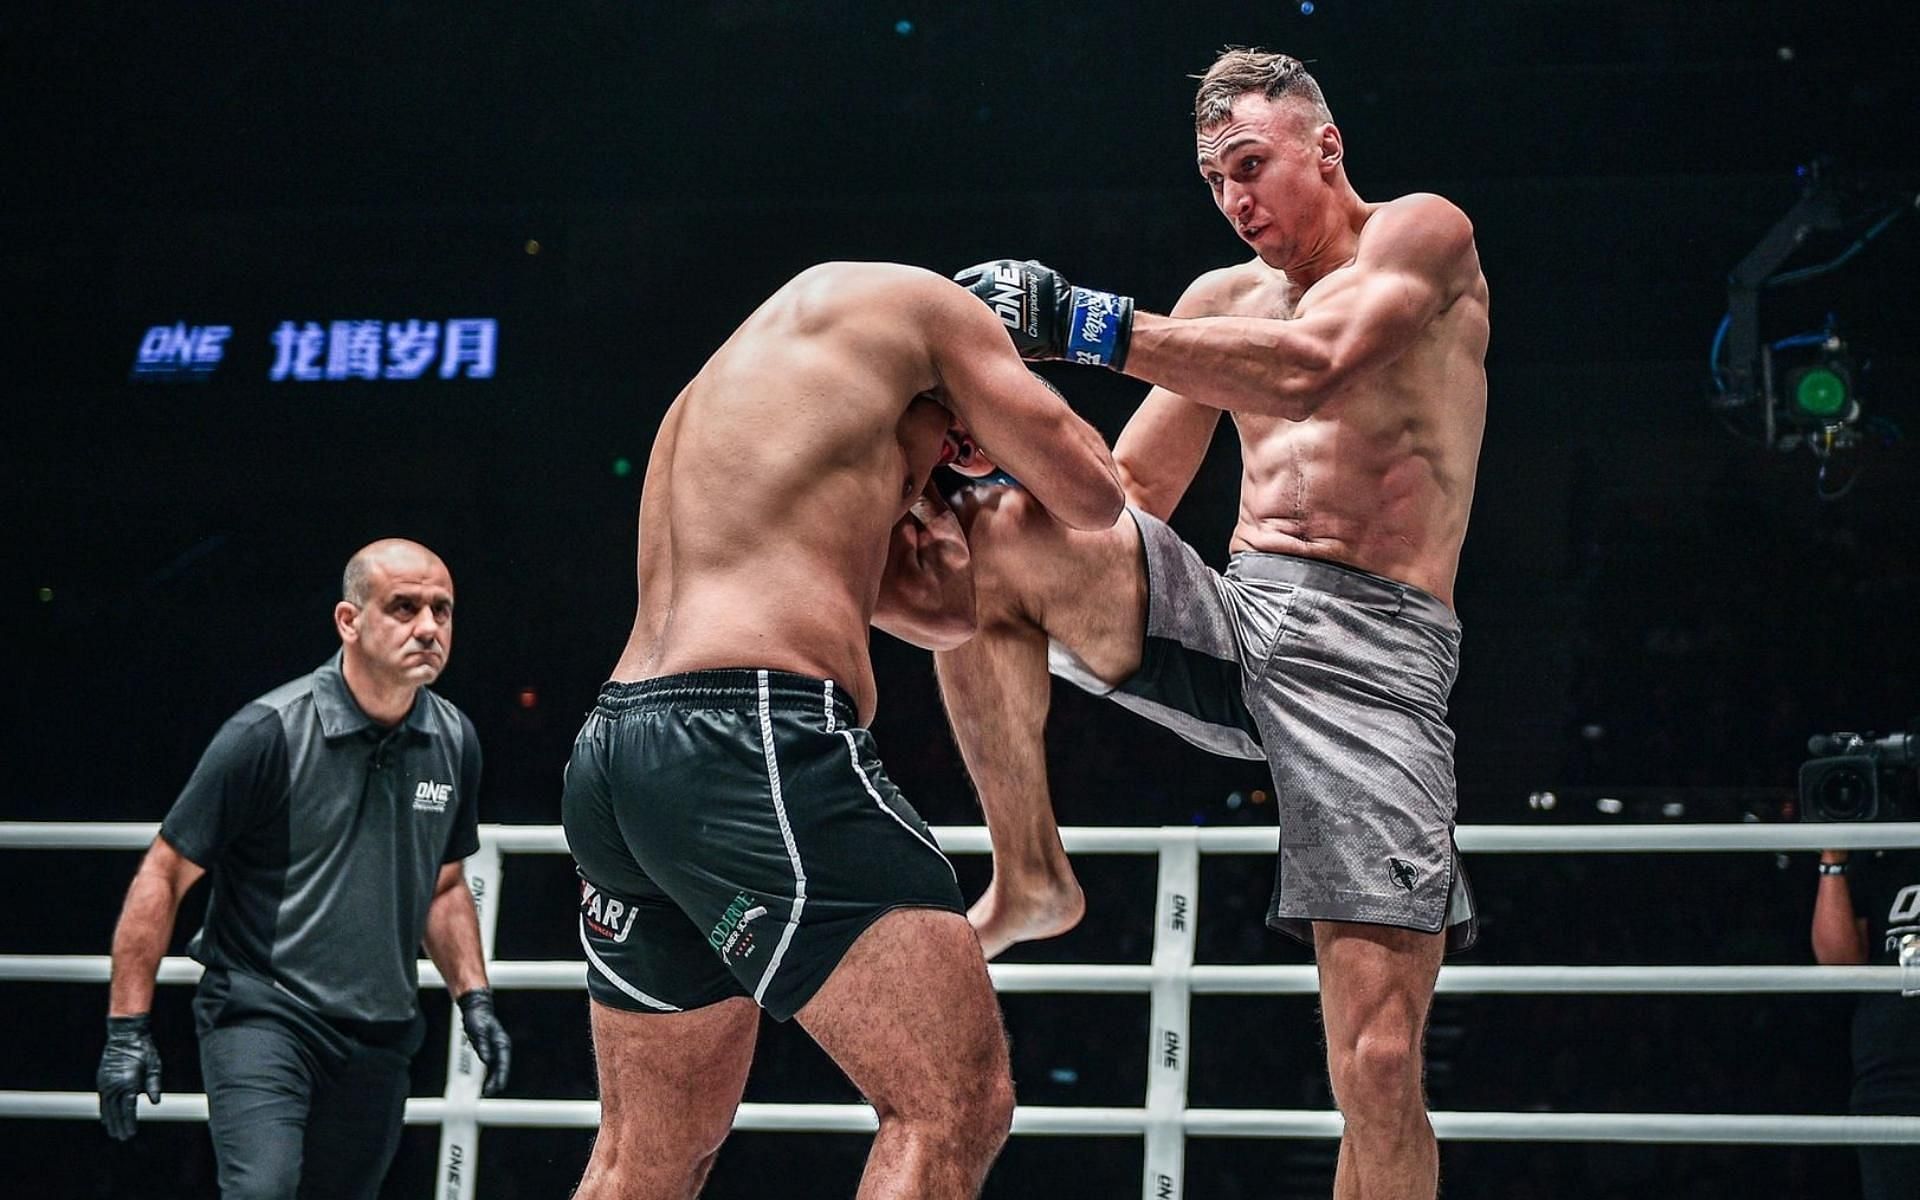 ONE light heavyweight kickboxing champion Roman Kryklia moves like a featherweight. (Image courtesy of ONE Championship)